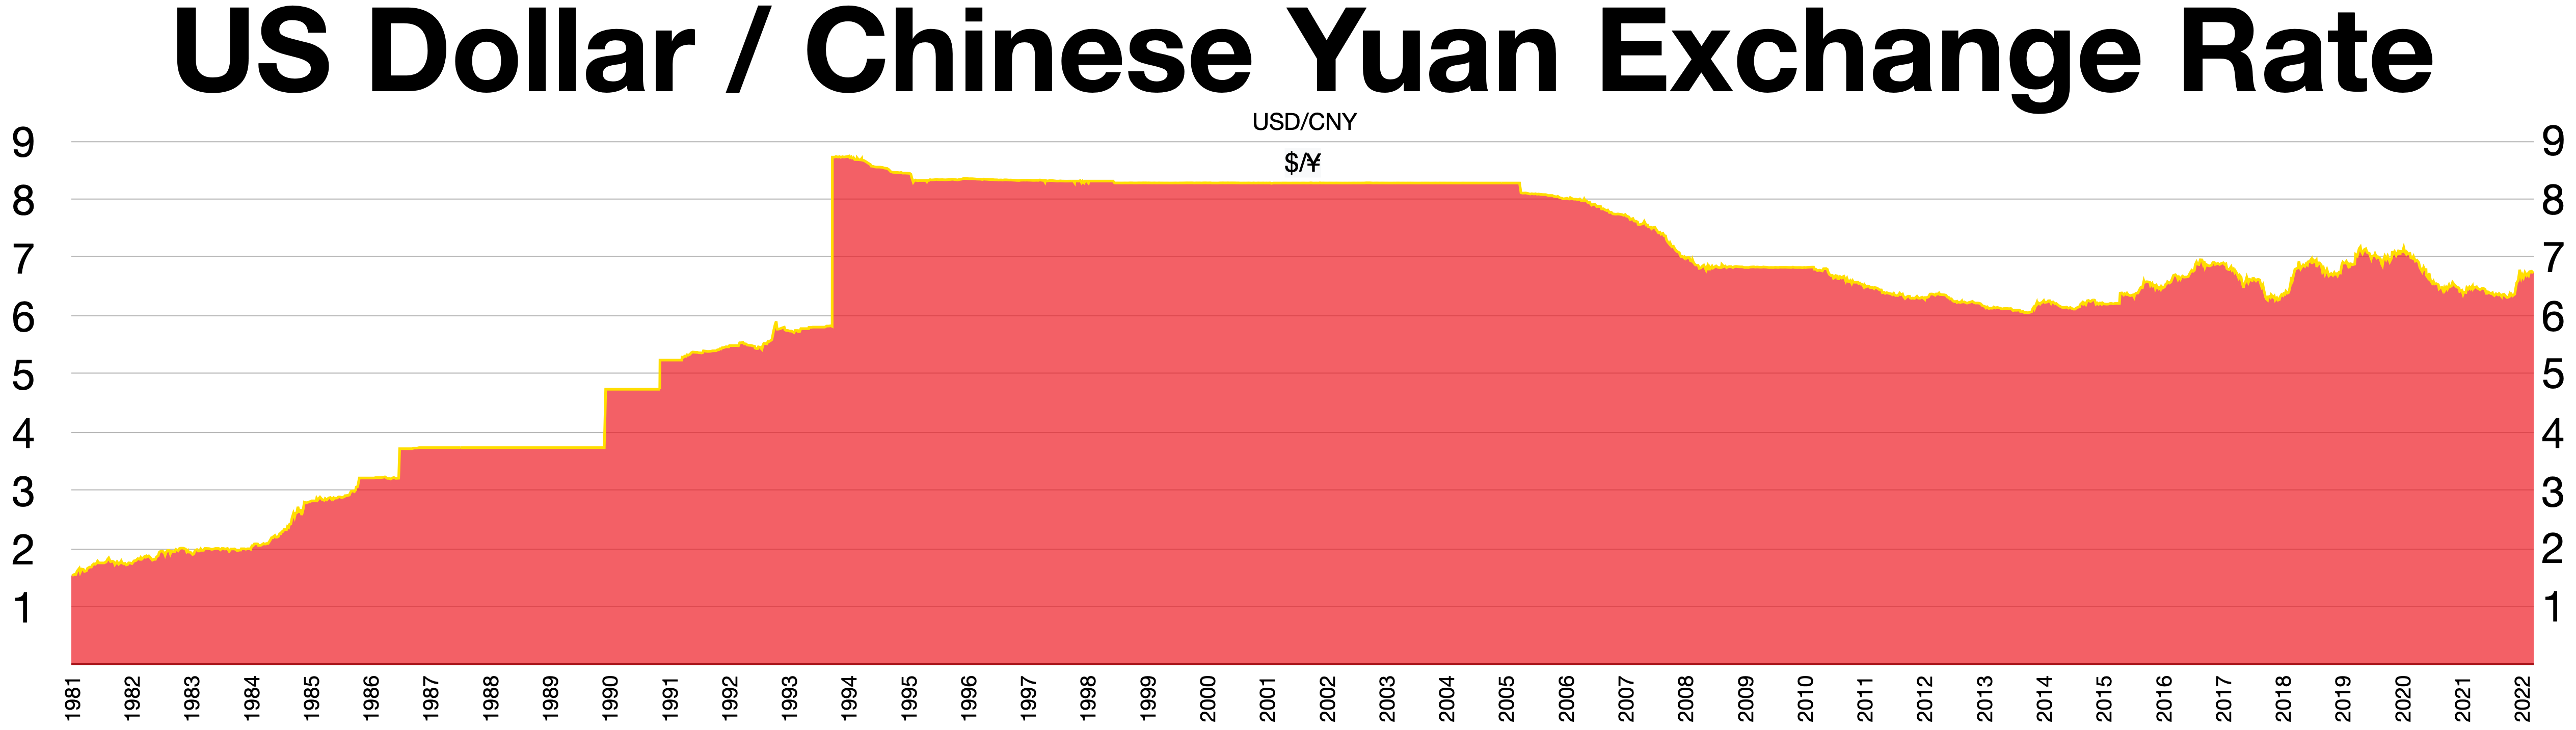 Chinese Yuan Renminbi to US Dollar Exchange Rate Chart | Xe